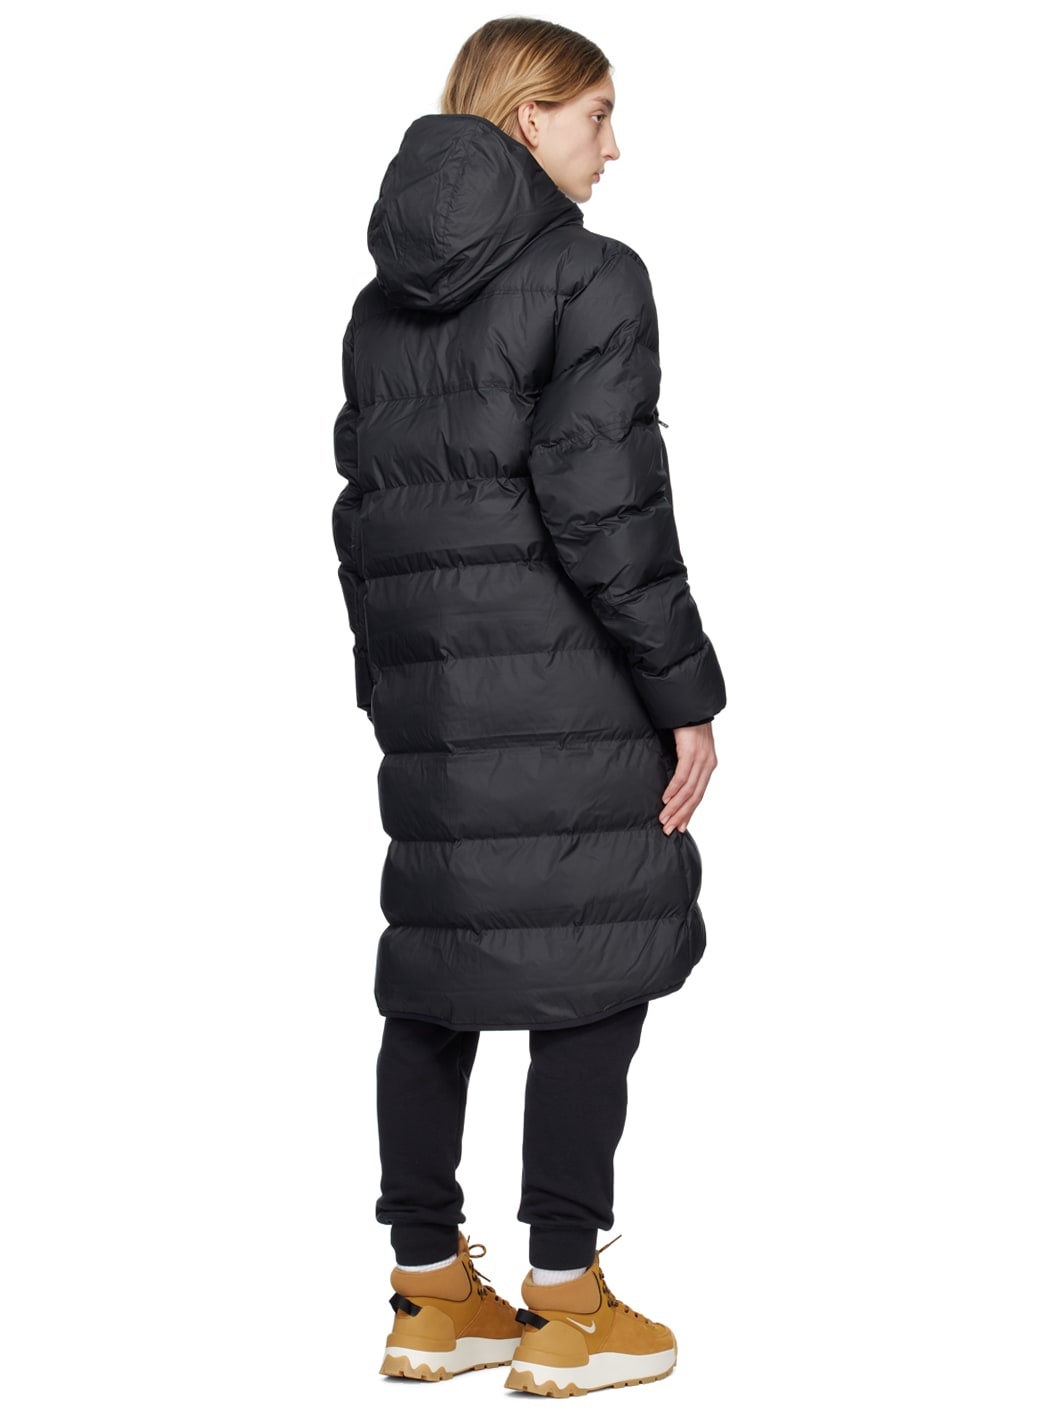 Black Sportswear Therma-FIT Jacket - 3